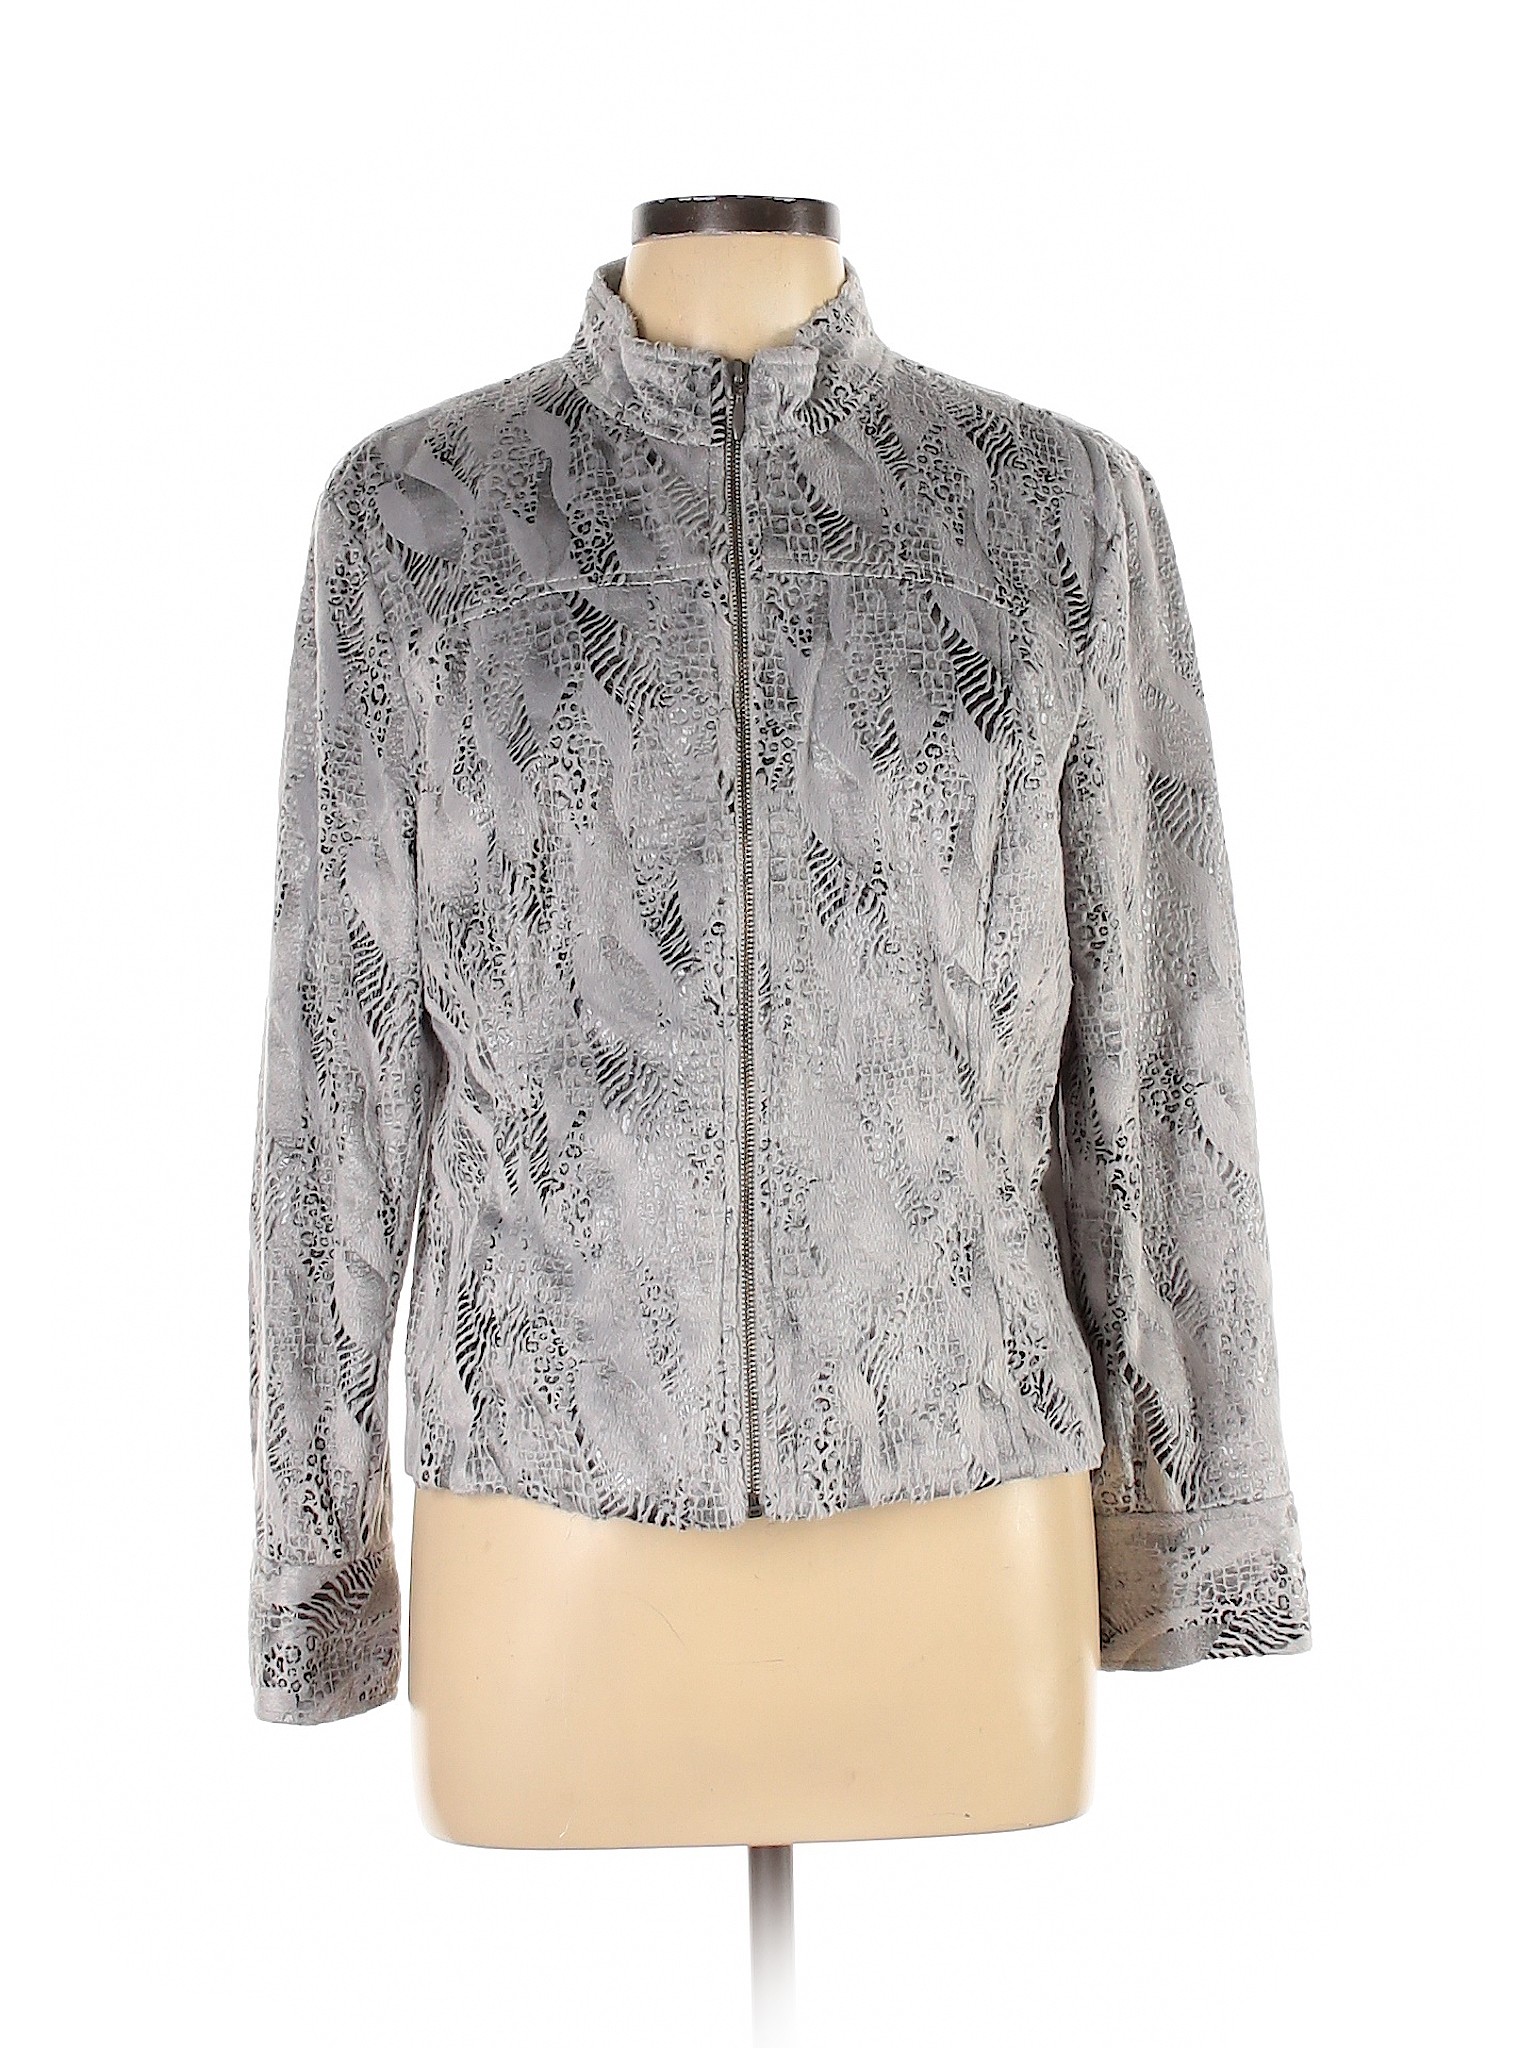 Lark Lane Women Gray Jacket 14 | eBay